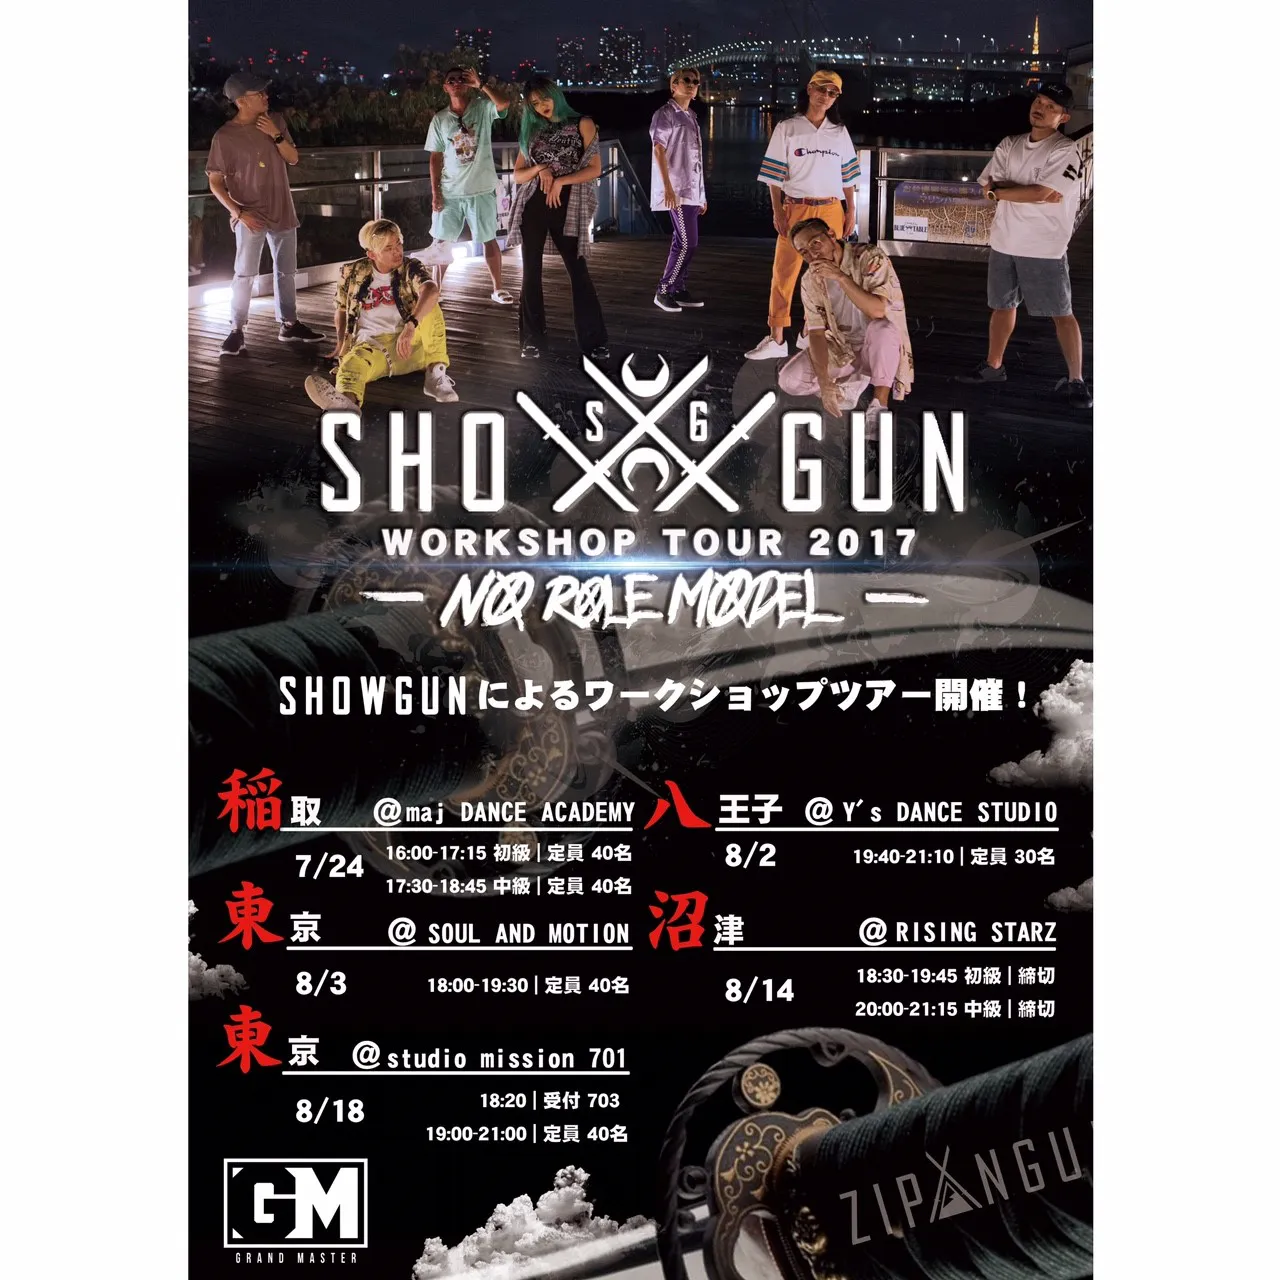 SHOW GUN WORKSHOP TOUR 2017